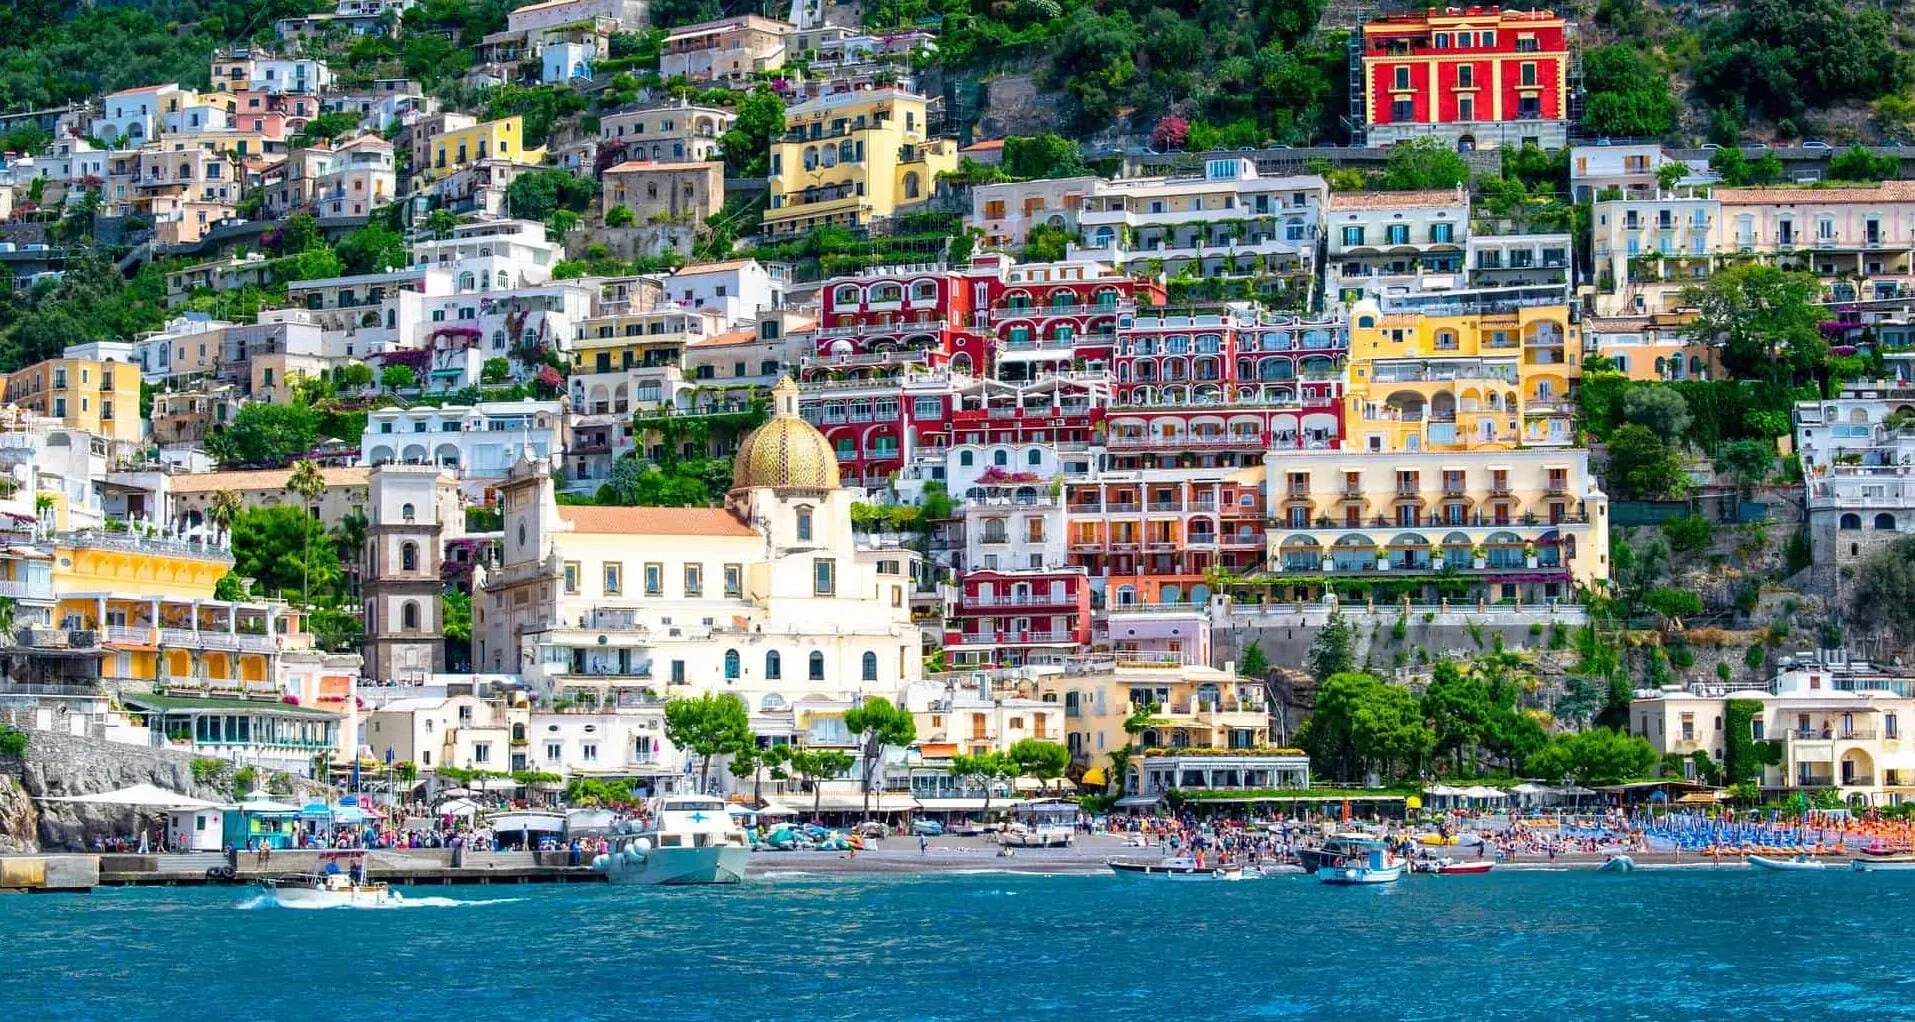 Costa Amalfitana o Cinque Terre: ¿cuál es mejor?